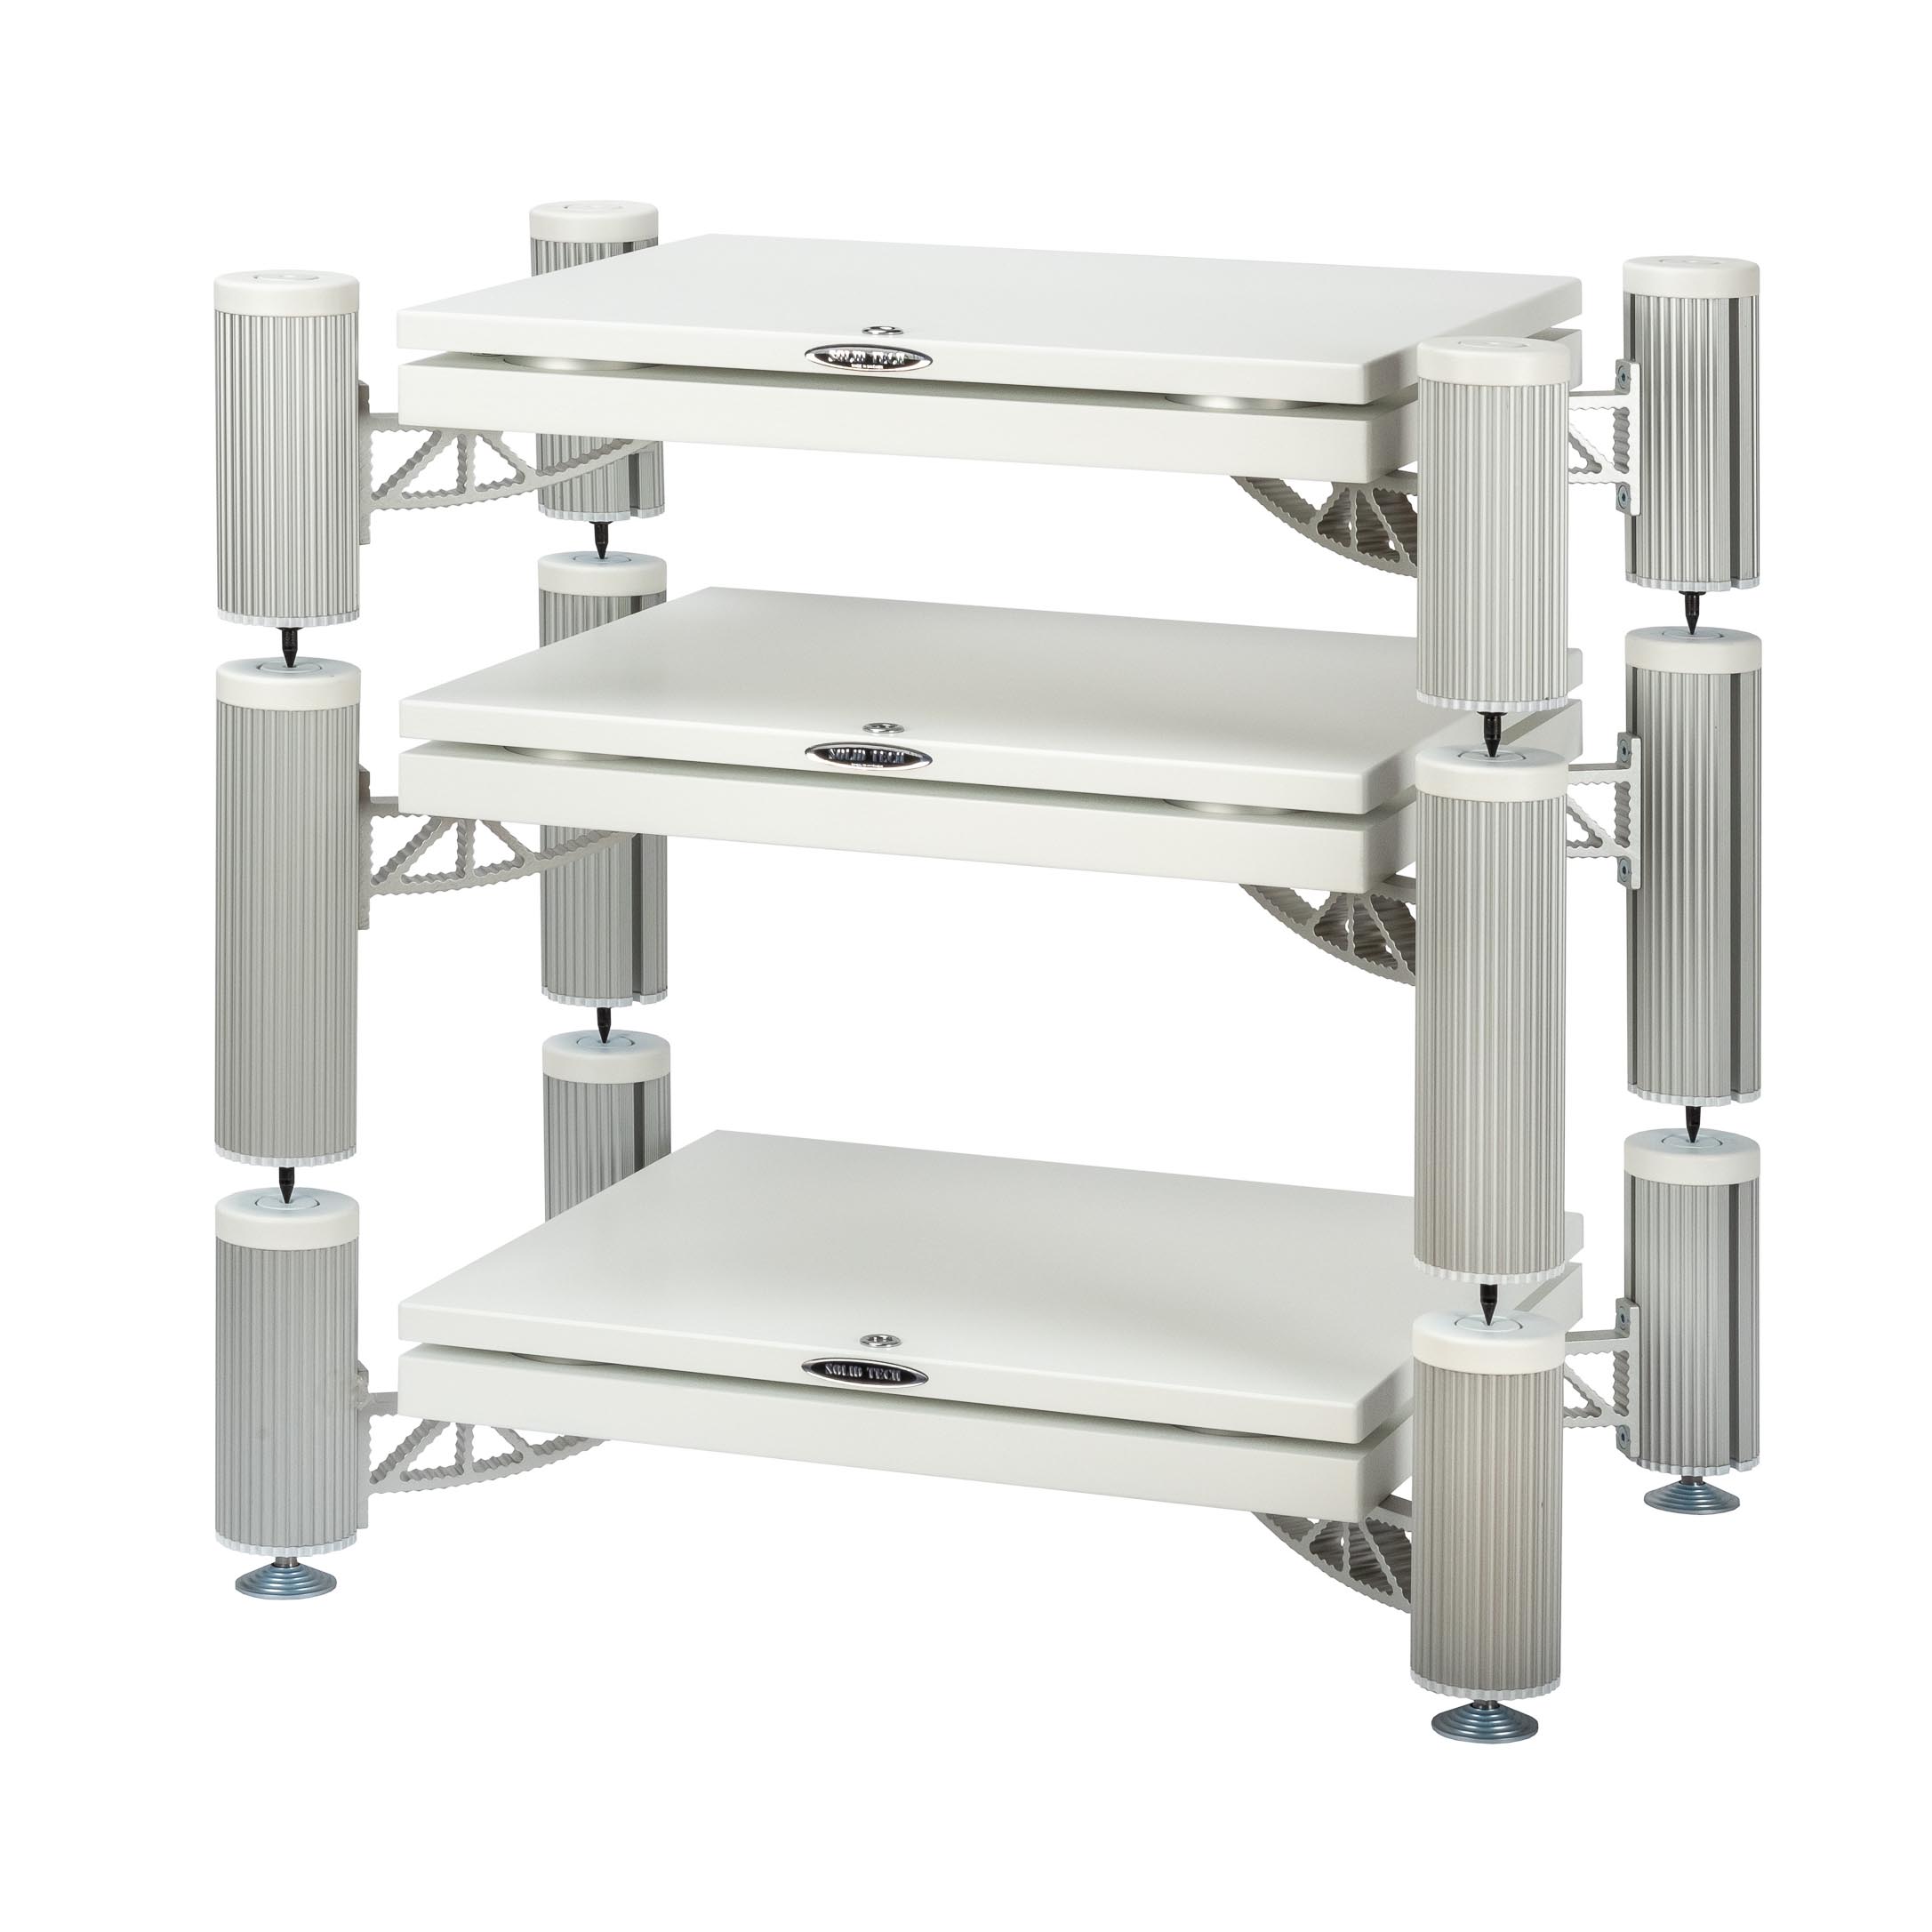 Hybrid 3 Shelf-kit design with isolation shelf-kit HD in white main image